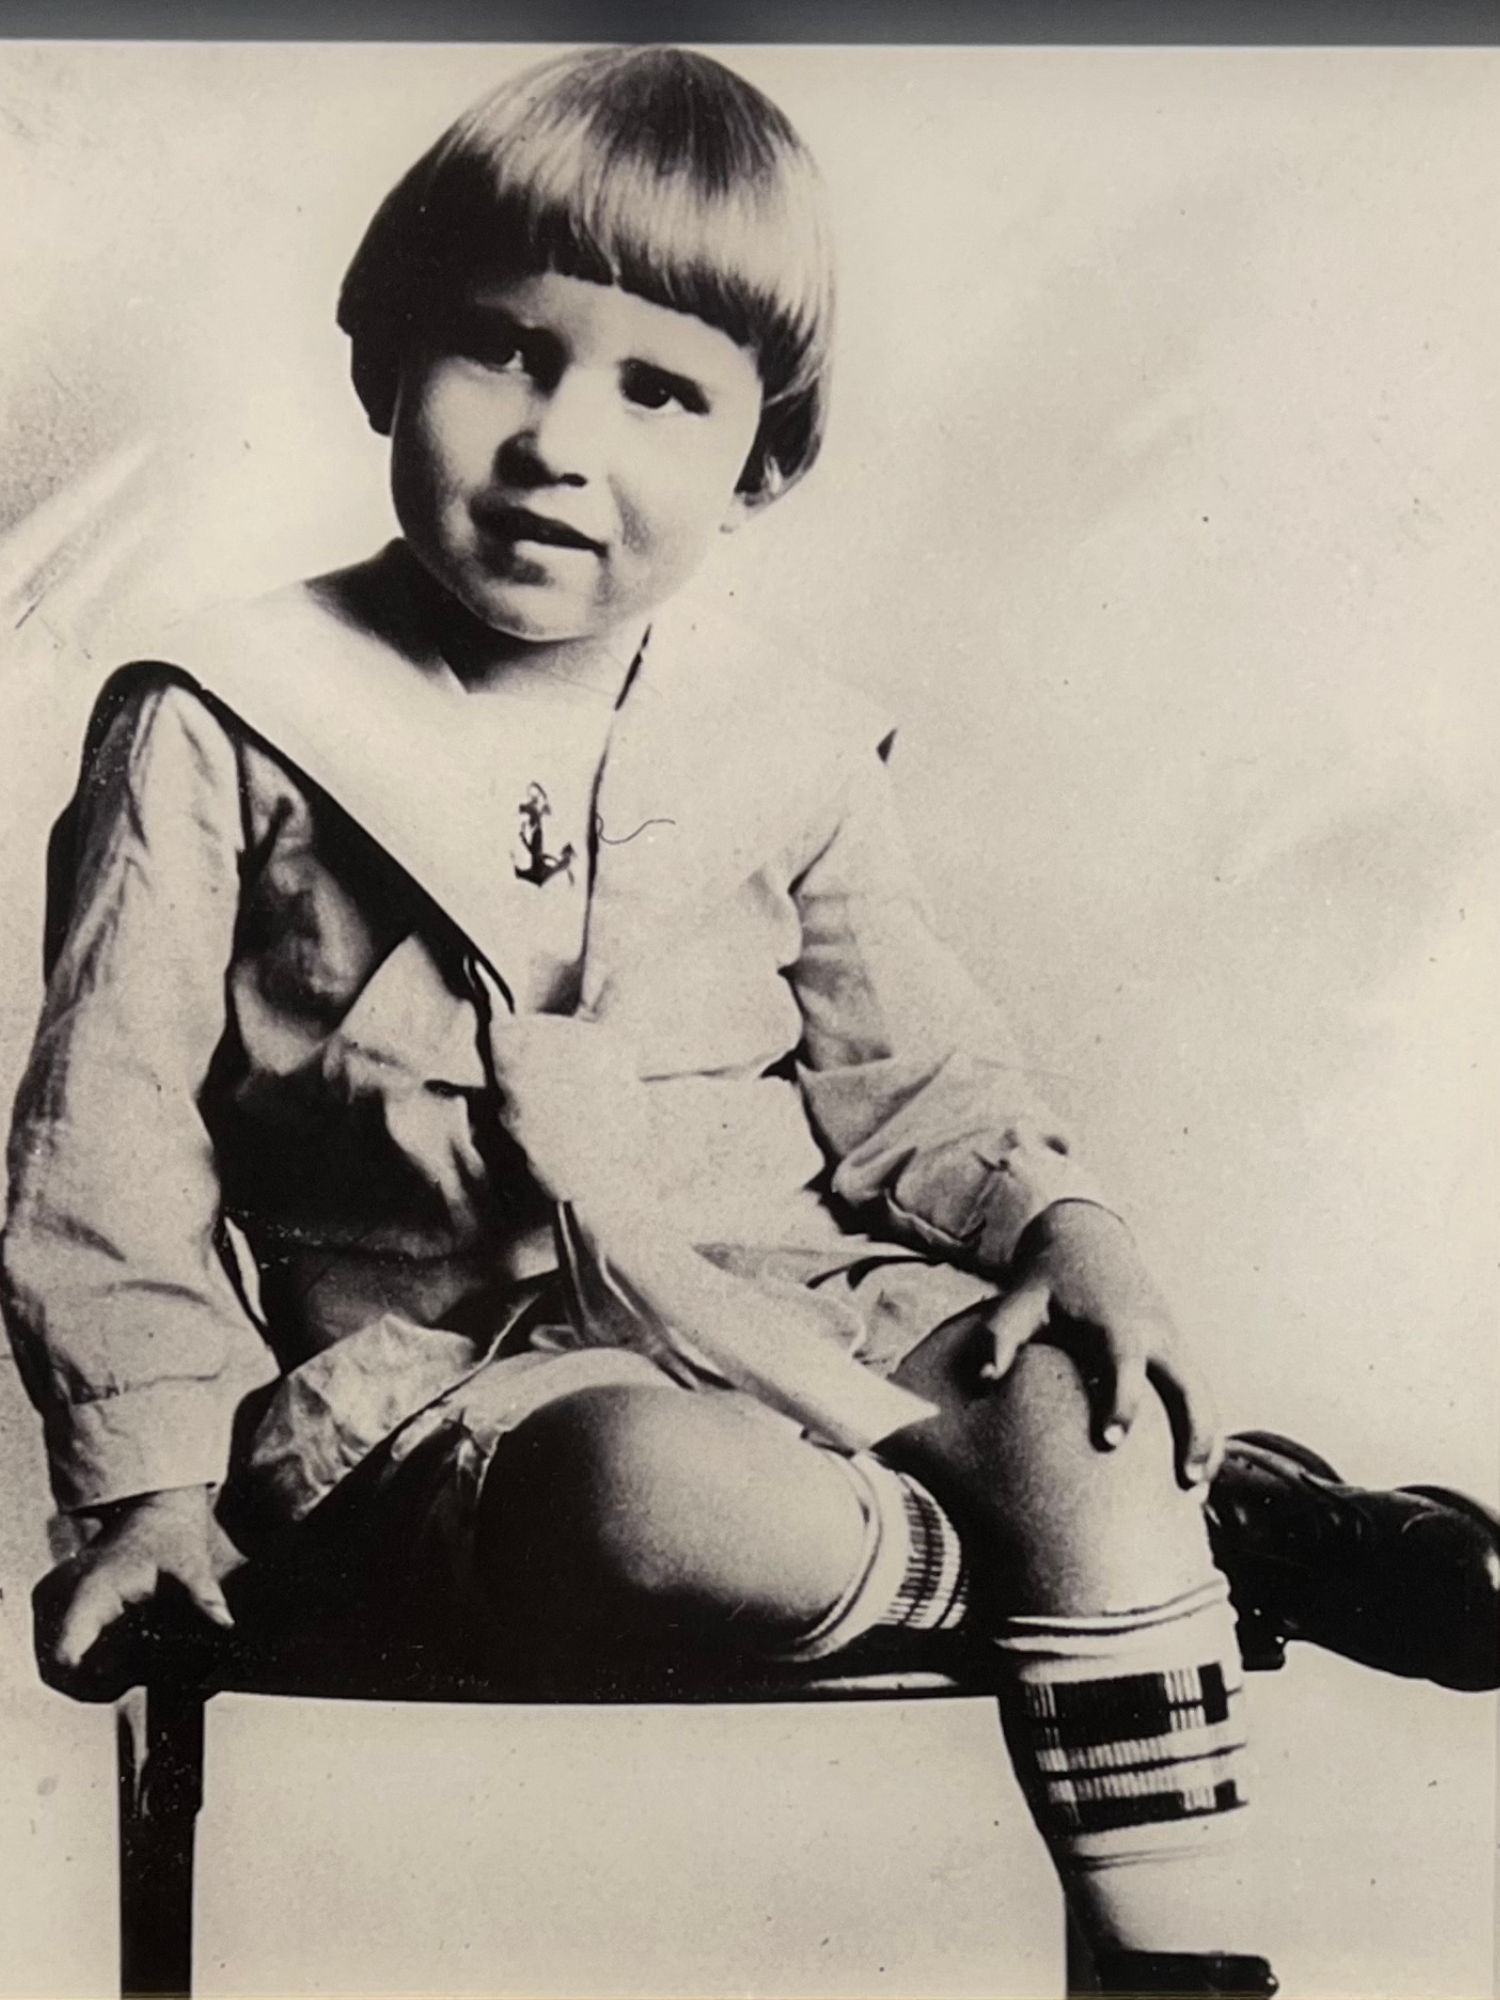 A Young Richard Nixon